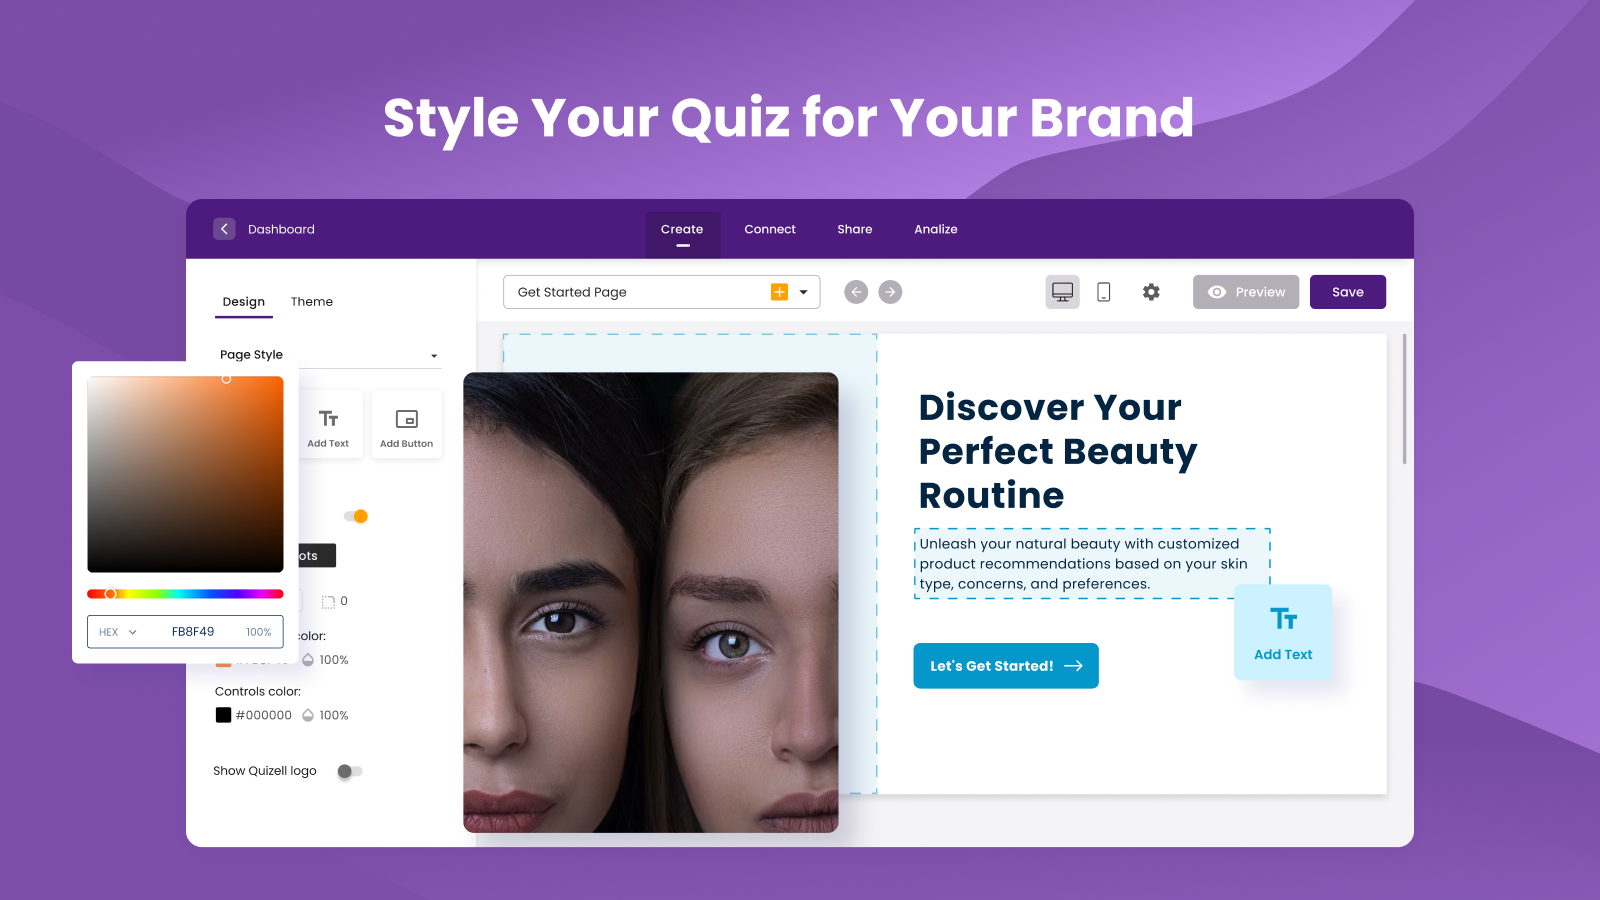 Customizable quiz design to match your website